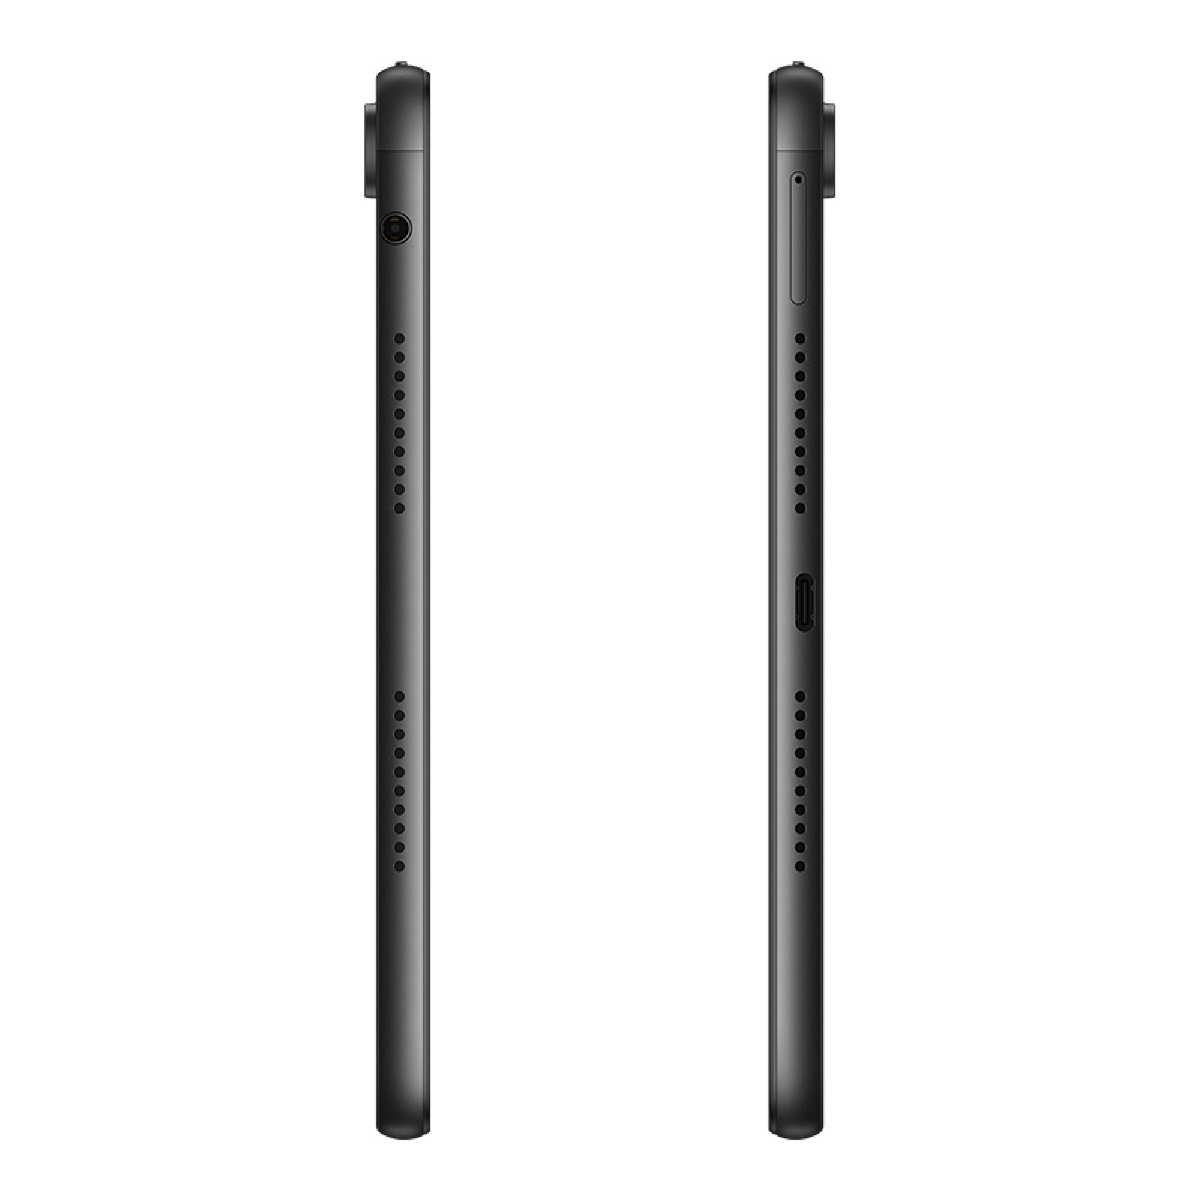 Huawei MatePad SE-L09 10.4inches,64GB ROM,4GB RAM,WiFi, 4G LTE, Graphite Black